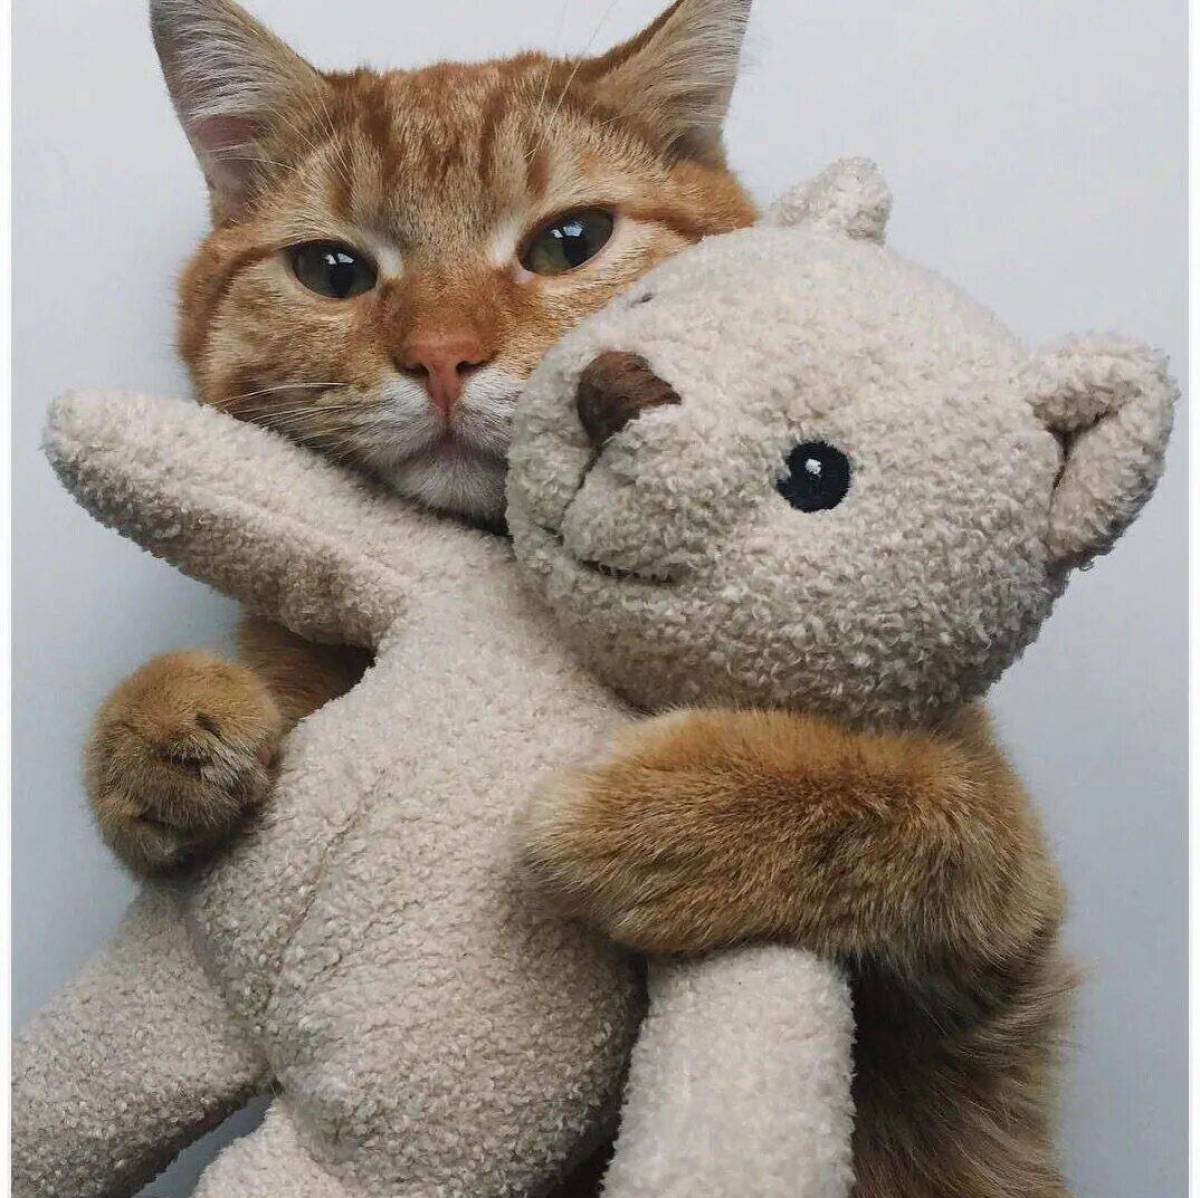 Обнимаю картинки. Котик обнимашка. Котик обнимает. Коты обнимаются. Кот обнимает игрушку.